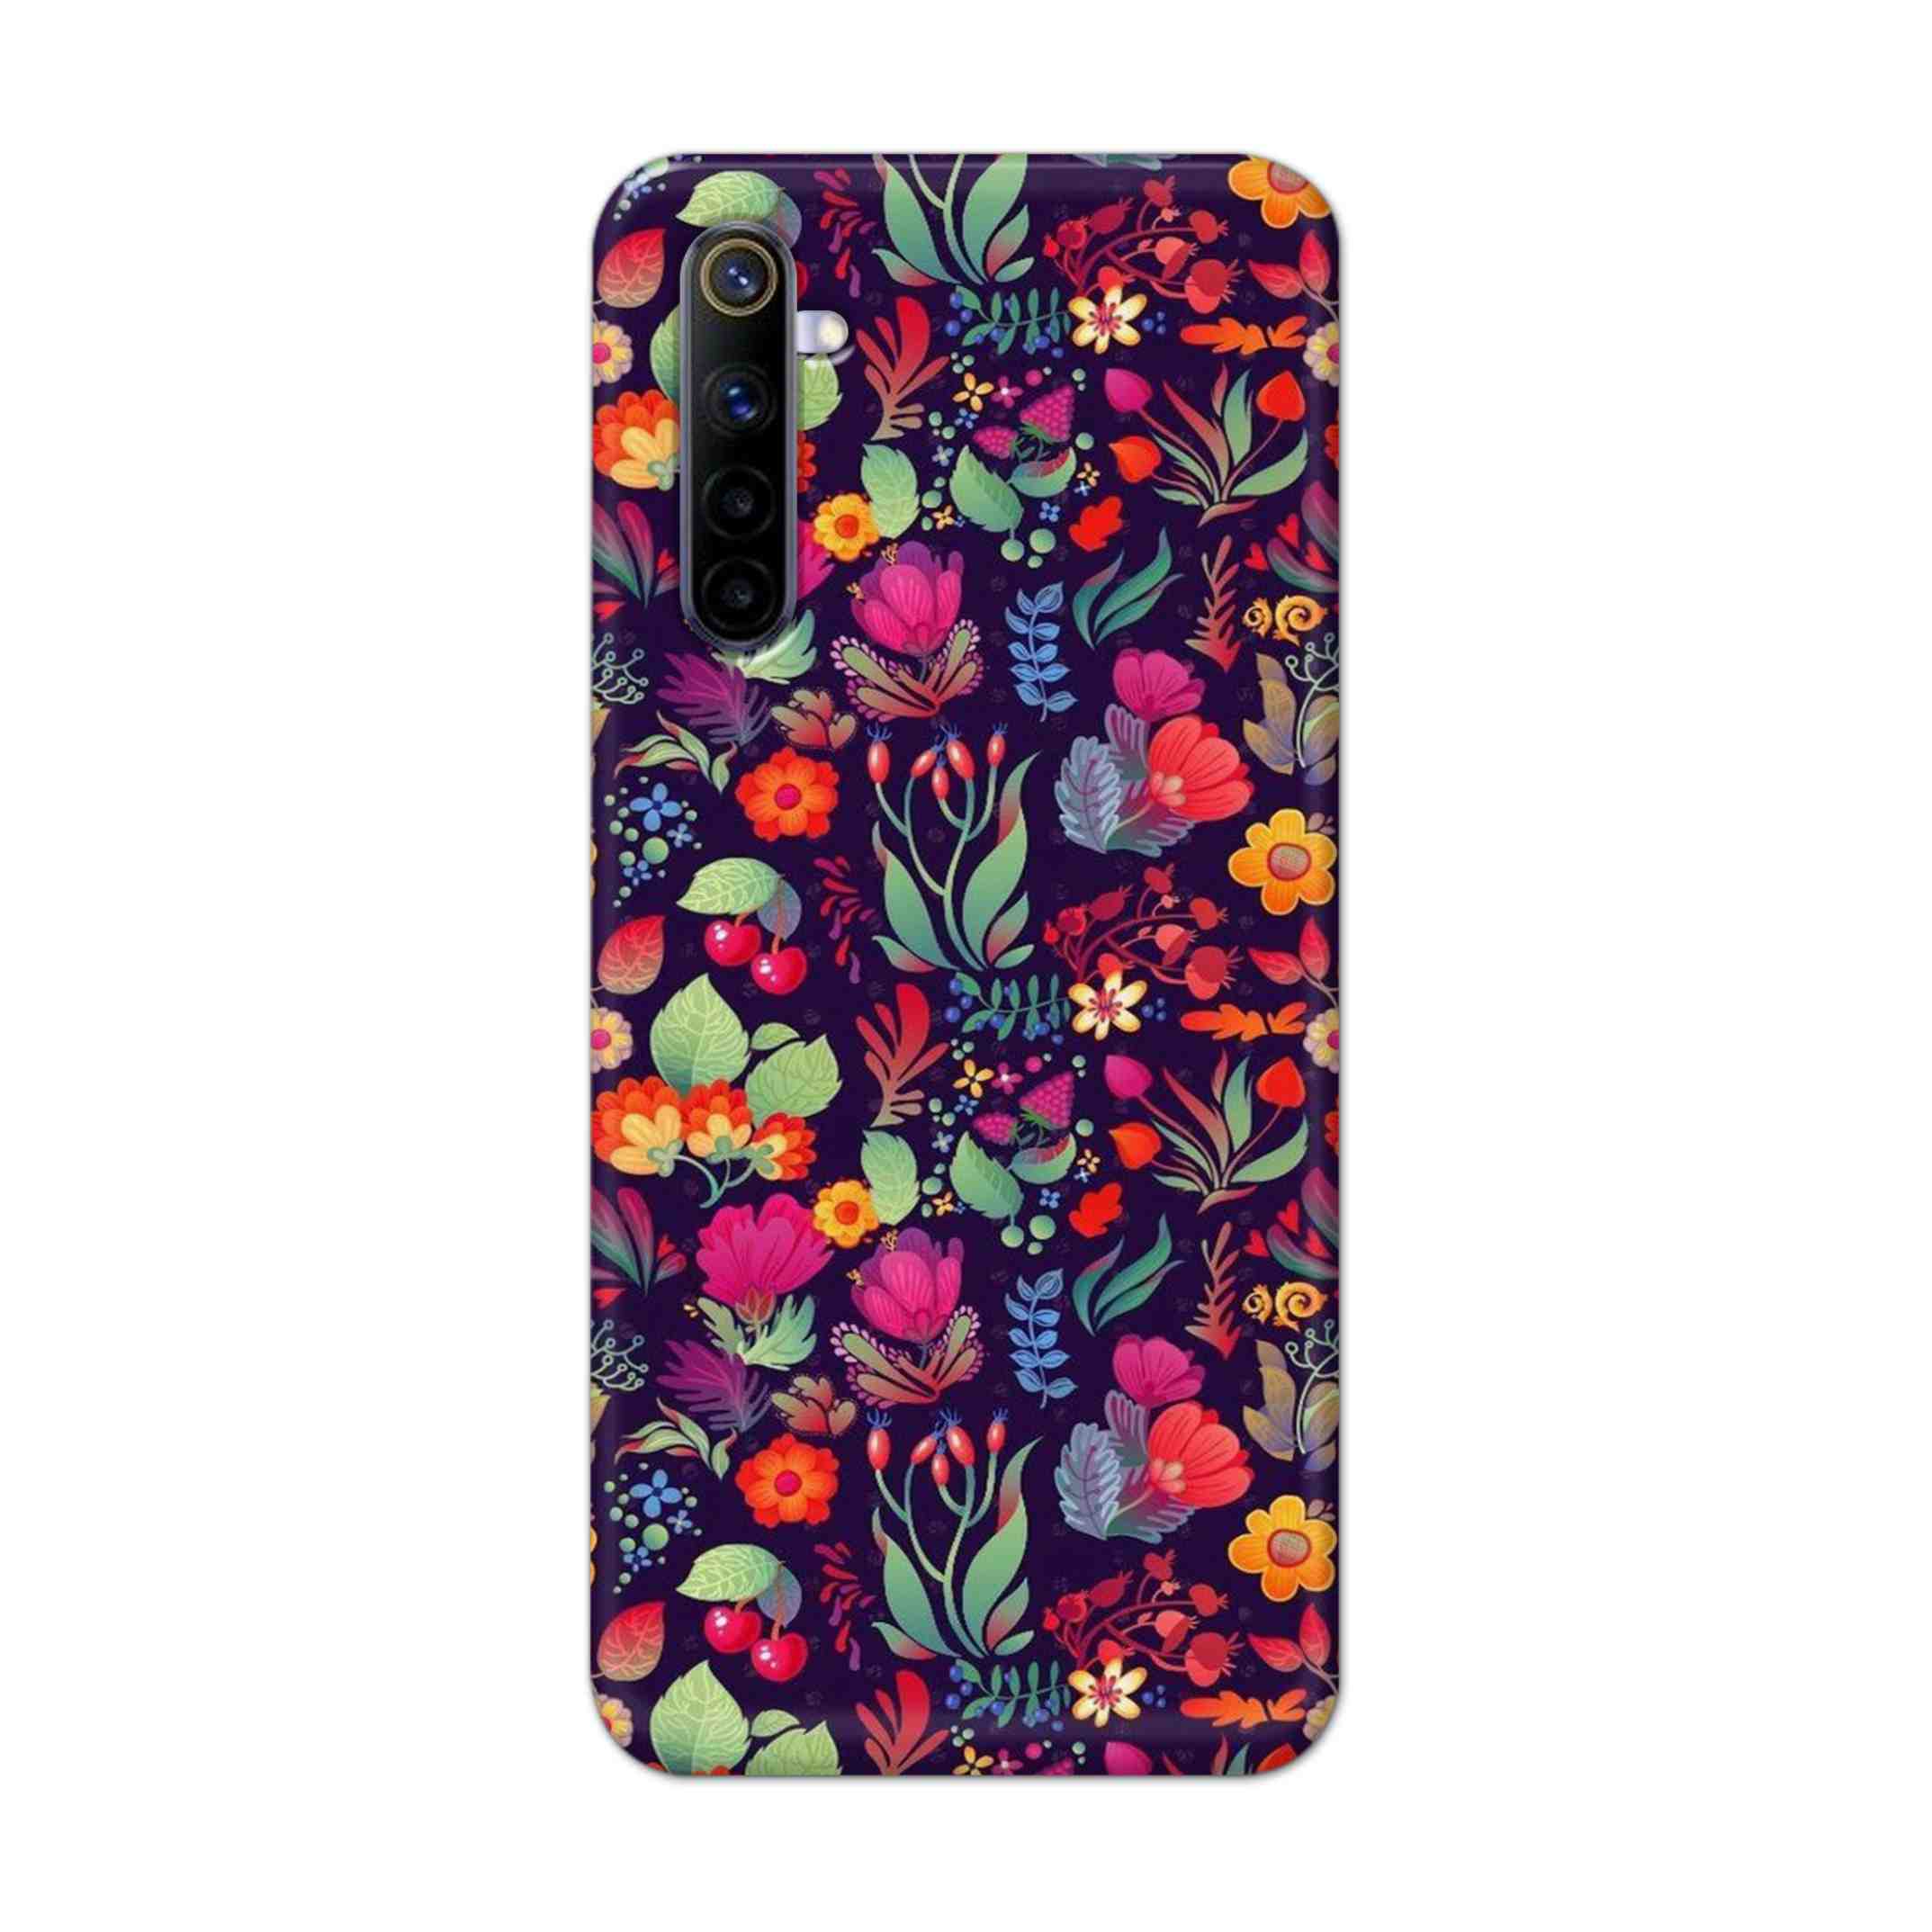 Buy Fruits Flower Hard Back Mobile Phone Case Cover For REALME 6 PRO Online